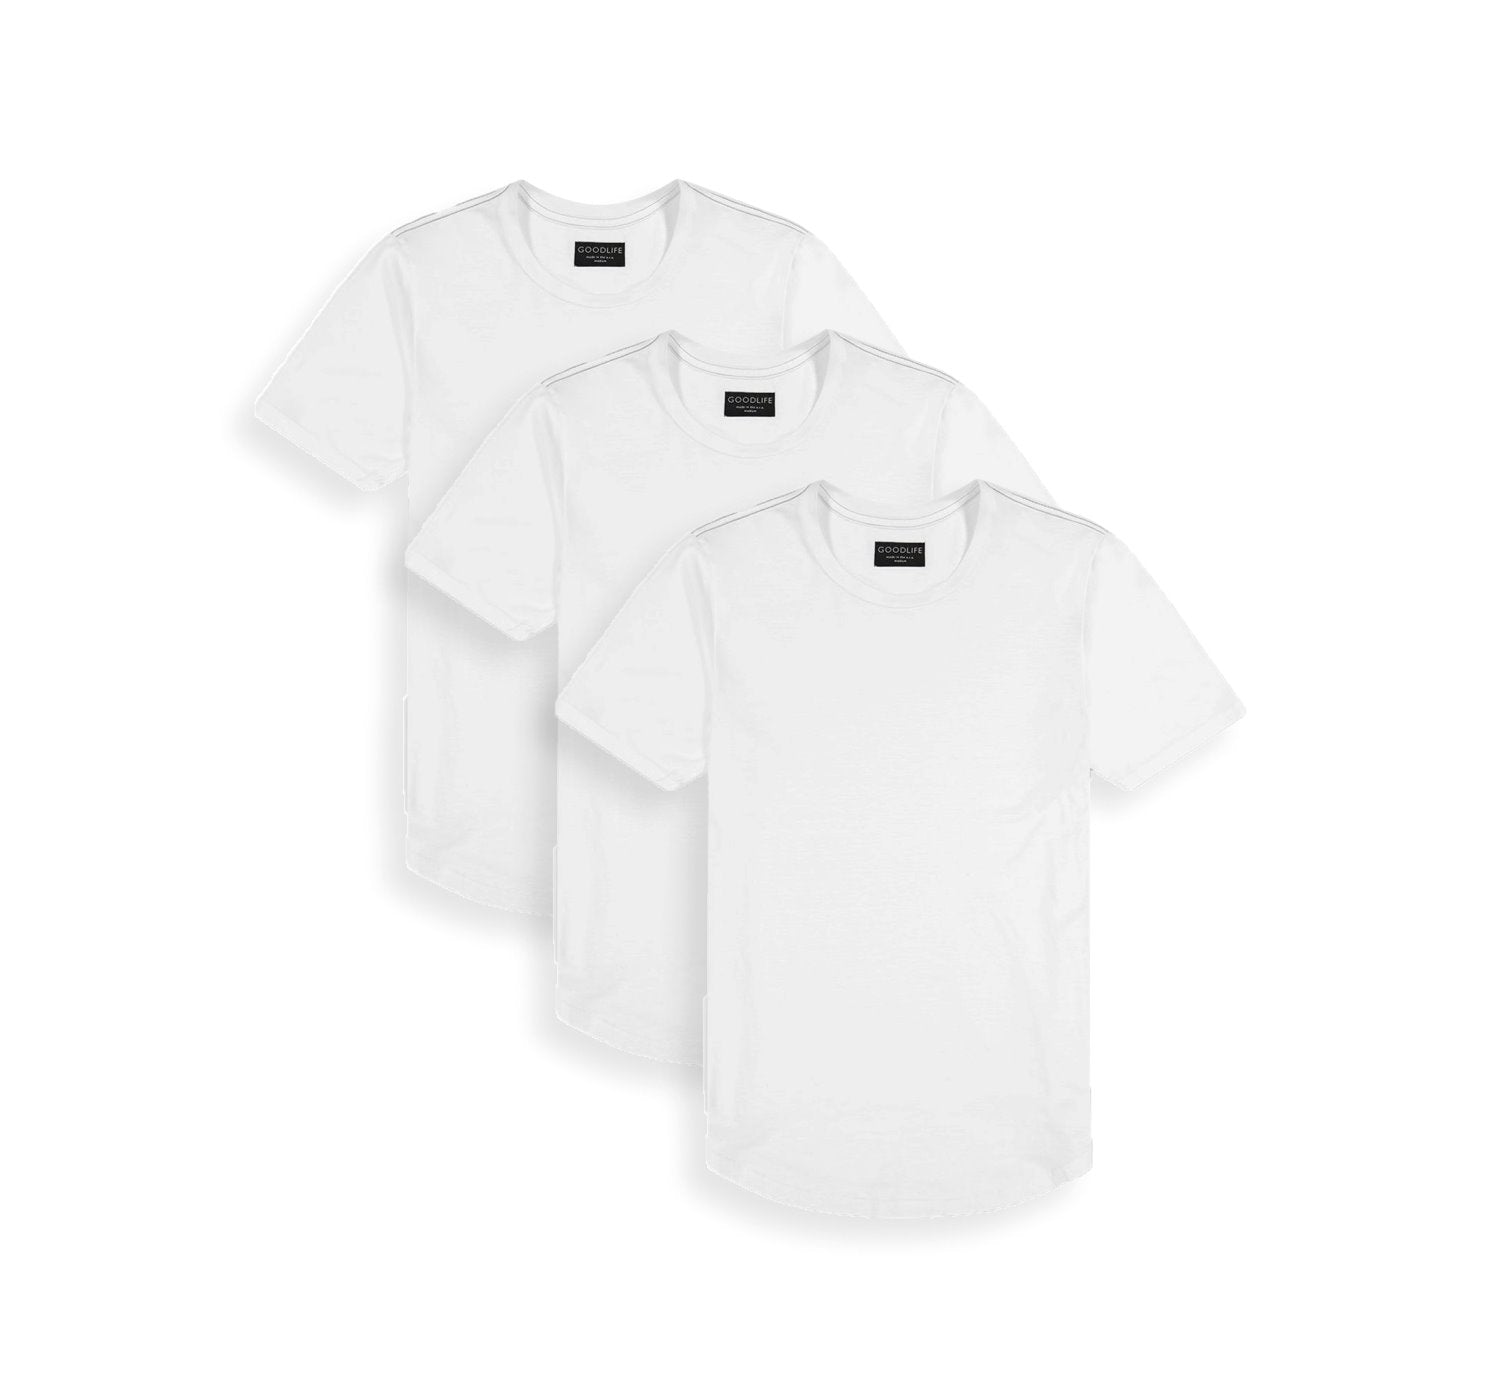 Tri-Blend Scallop Crew 3-Pack Bundle | White